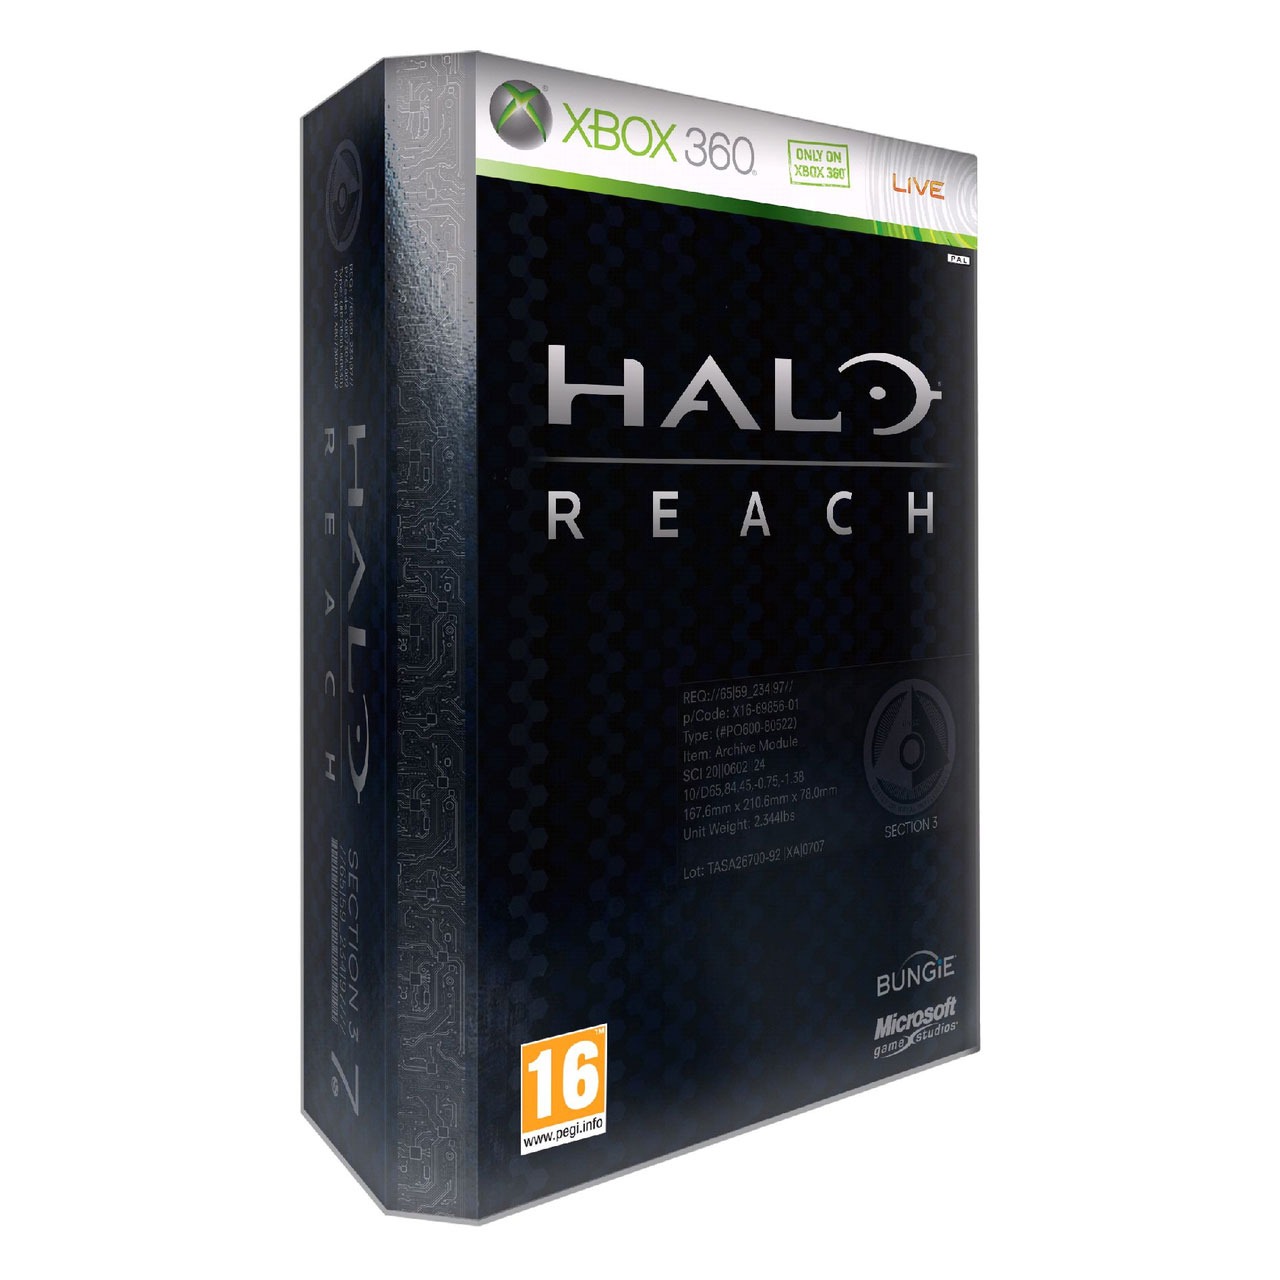 Halo Reach Limited Collectors Edition